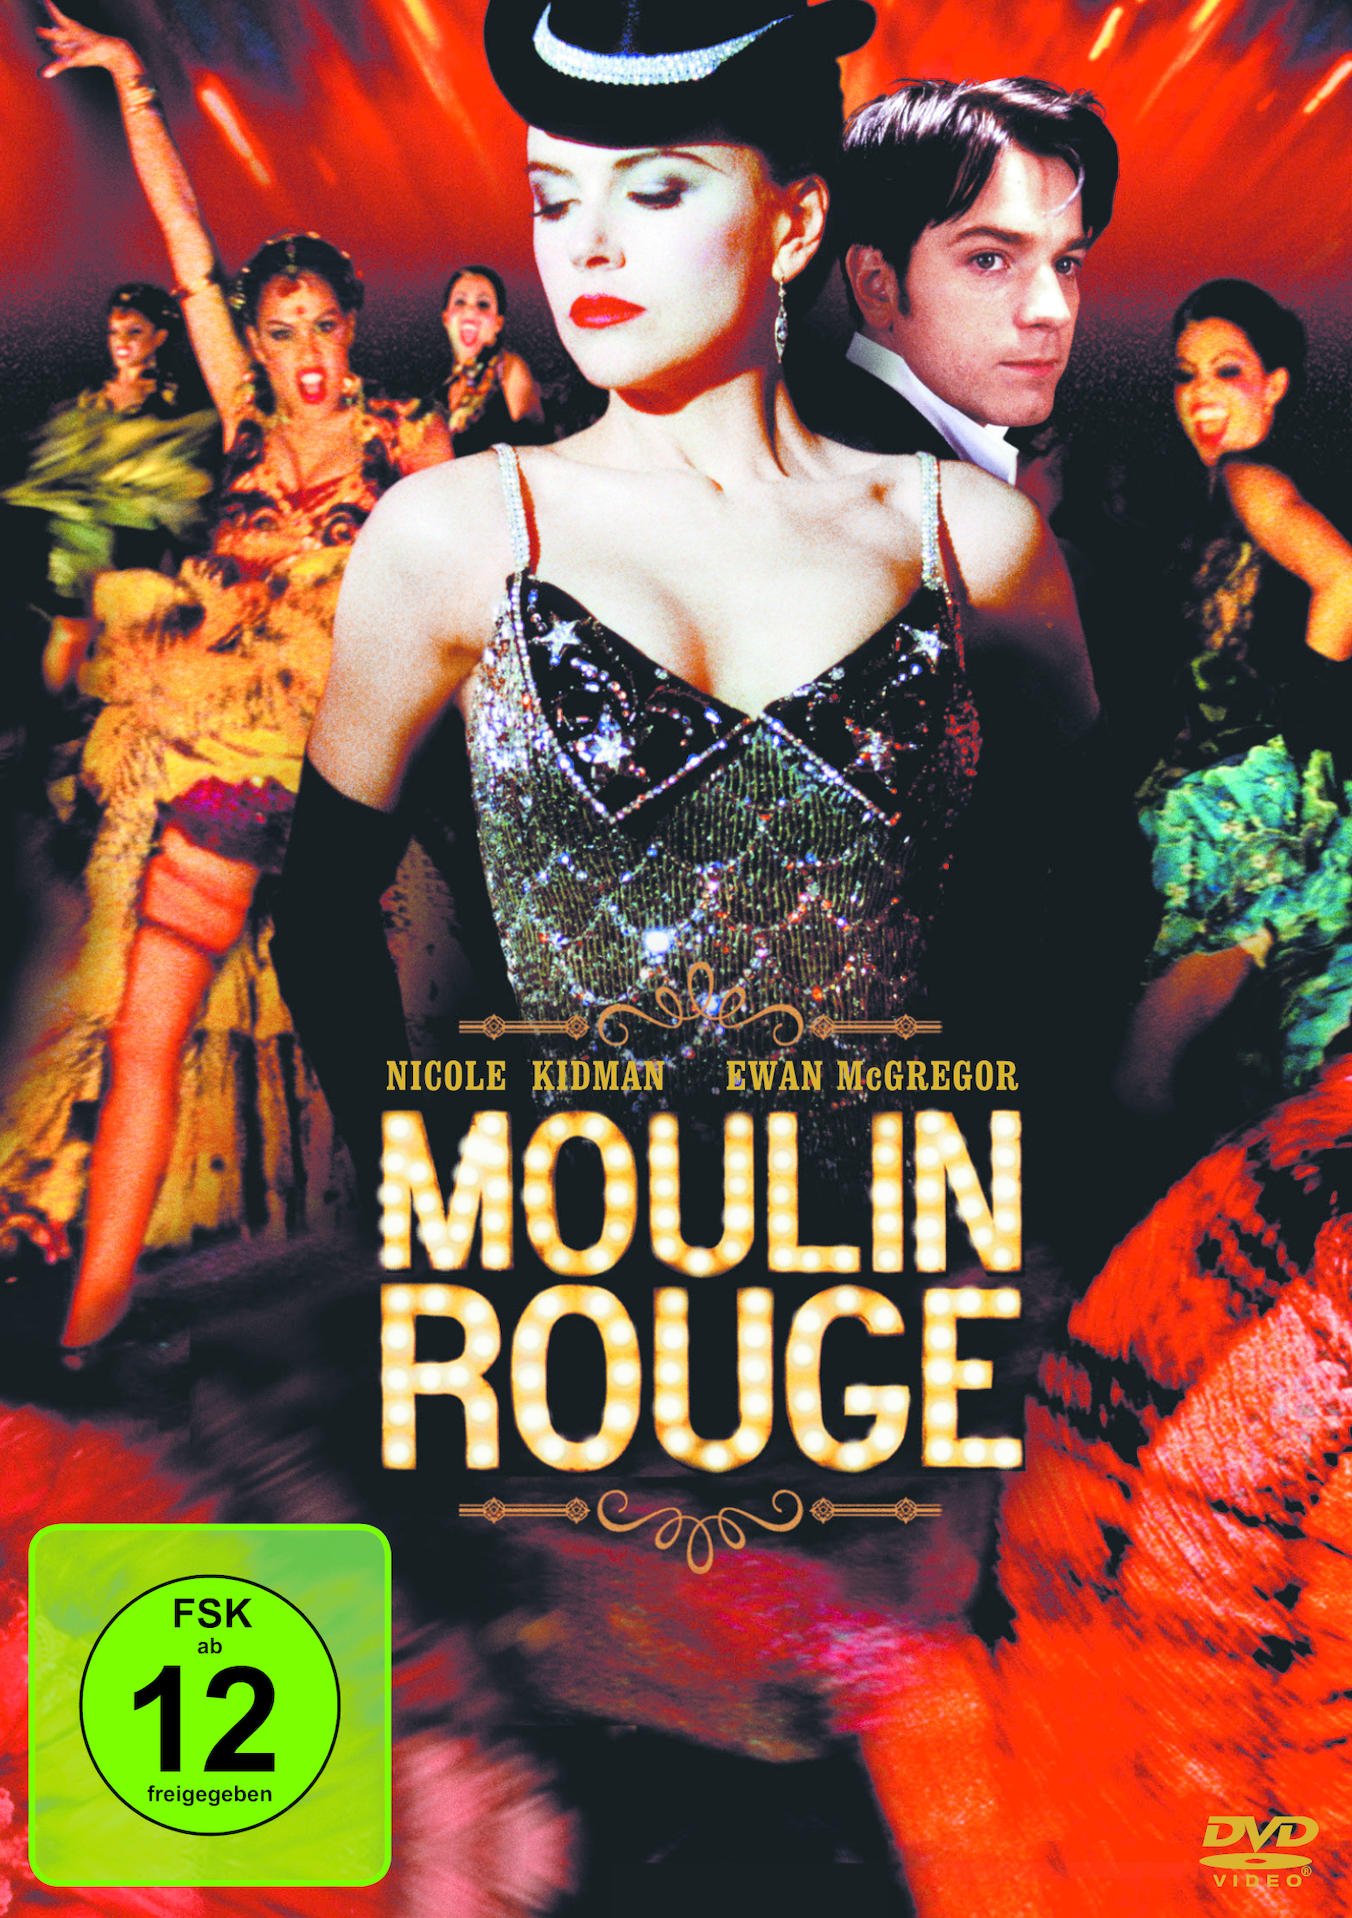 DVD Rouge Moulin